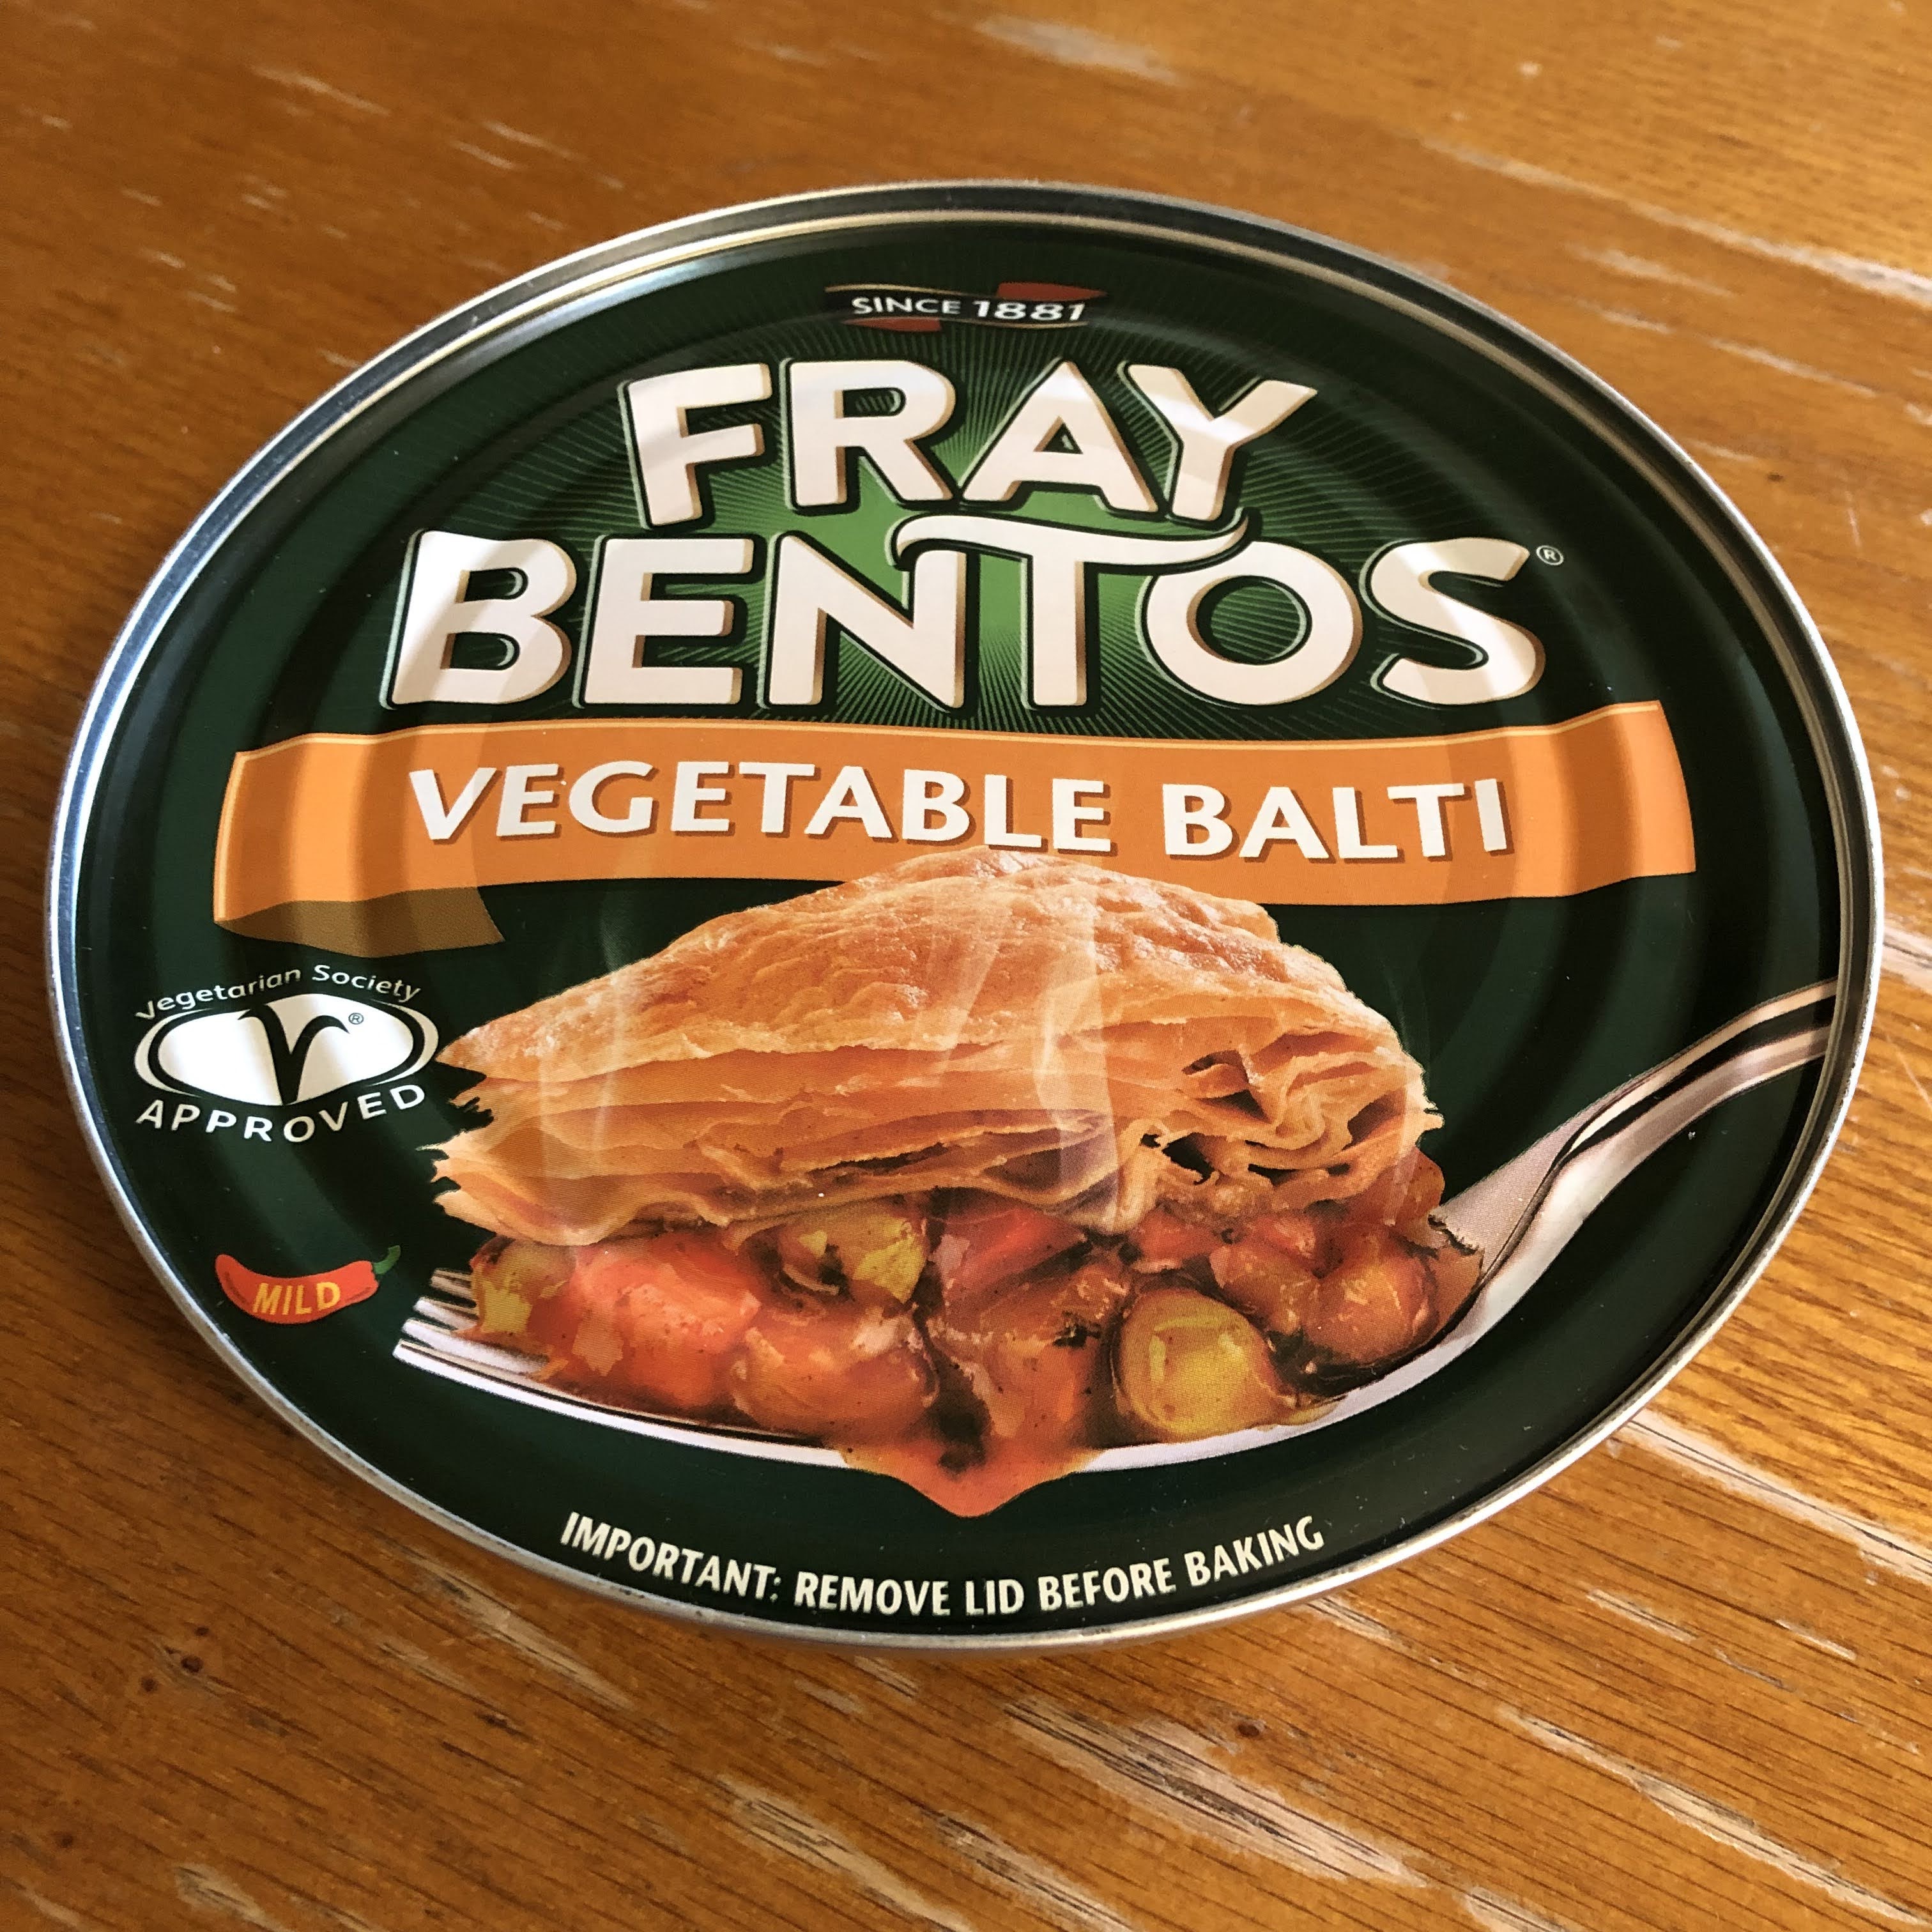 Fray Bentos Vegetable Balti Tinned Pie Review